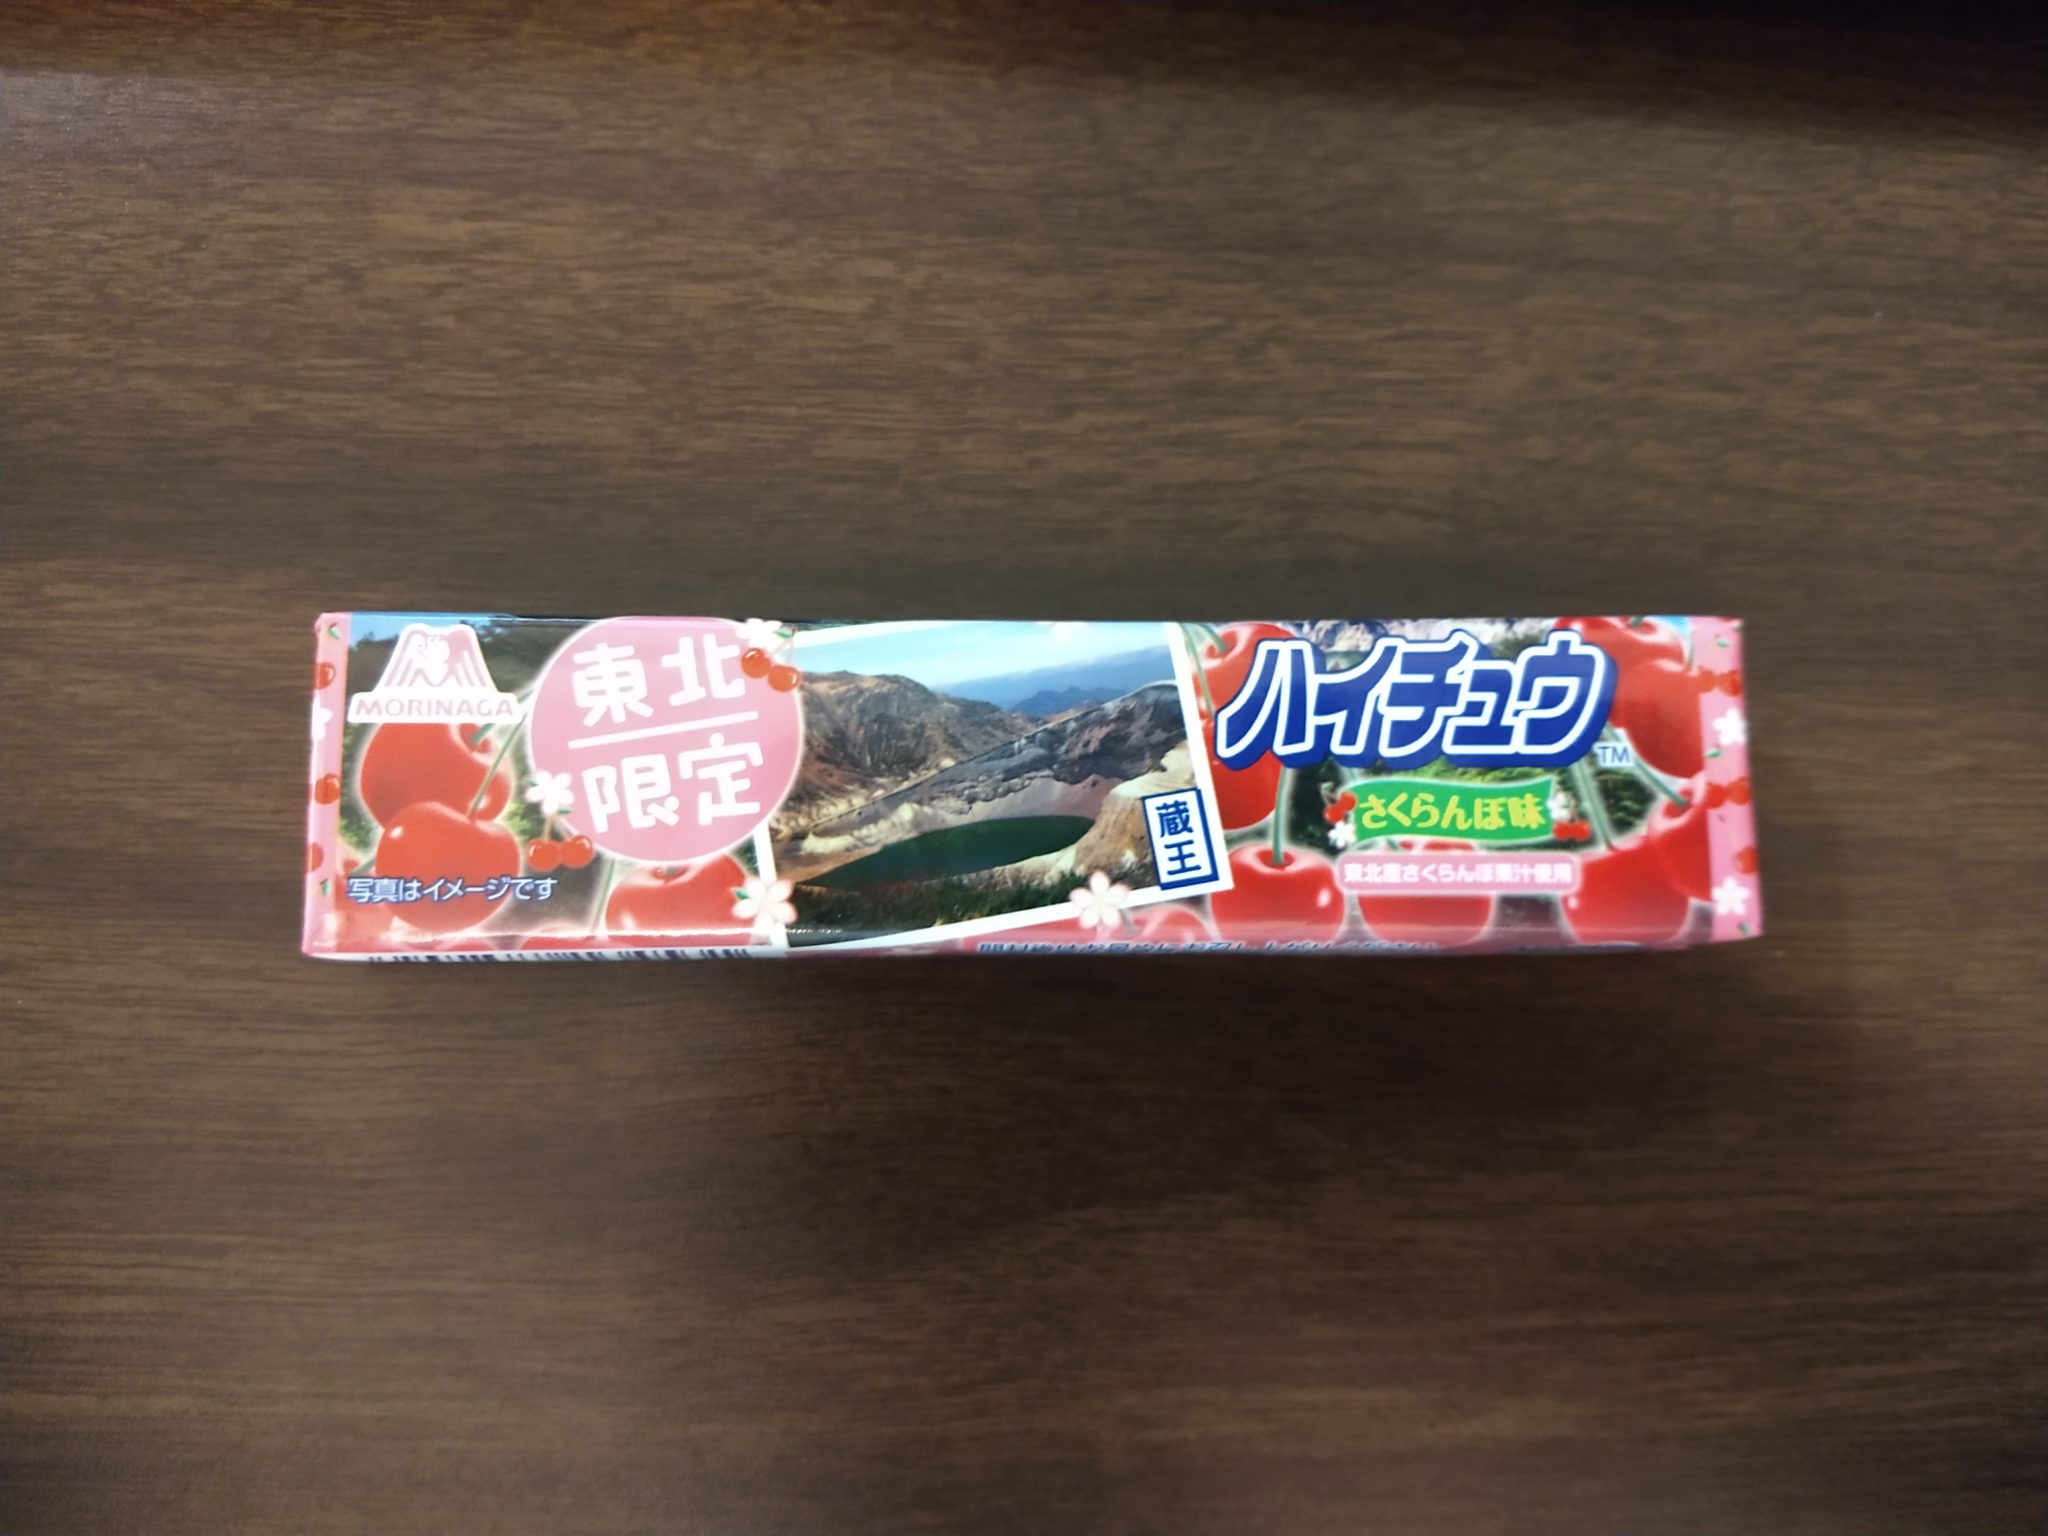 Hi-Chew – Tohoku Cherry